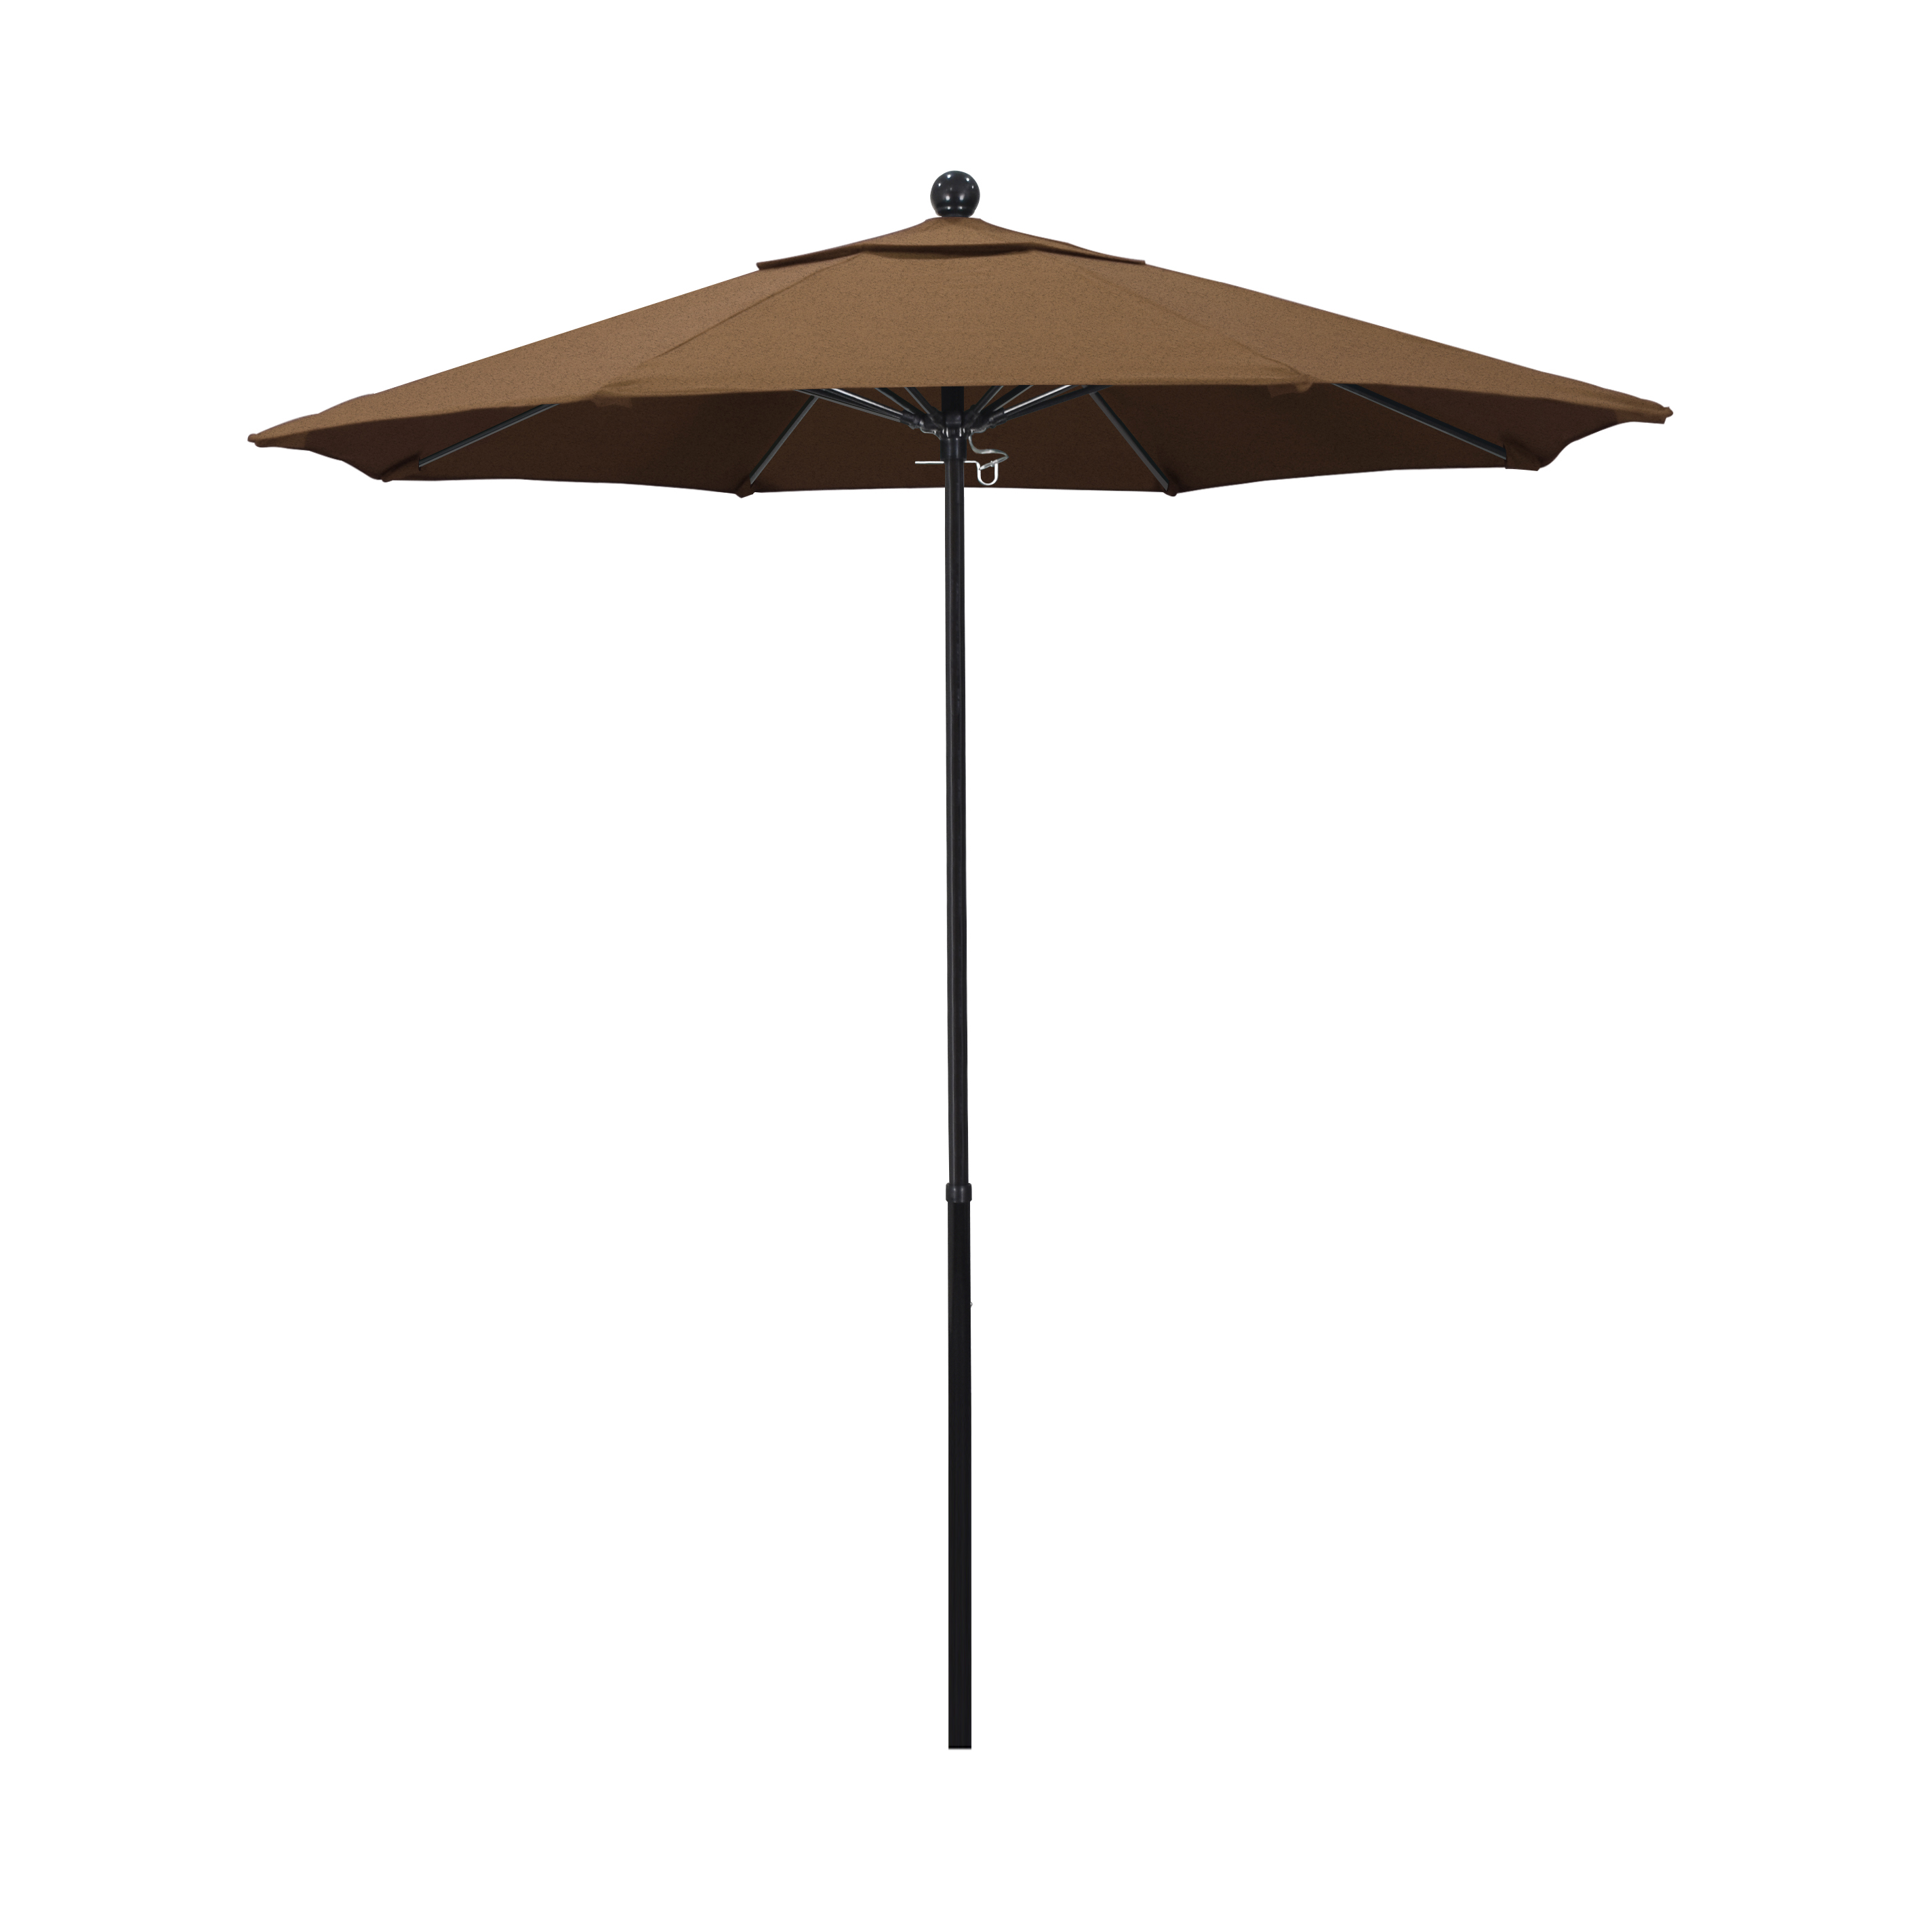 Effo758-5488 7.5 Ft. Complete Fiberglass Pulley Open Market Umbrella - Black And Sunbrella-canvasteak